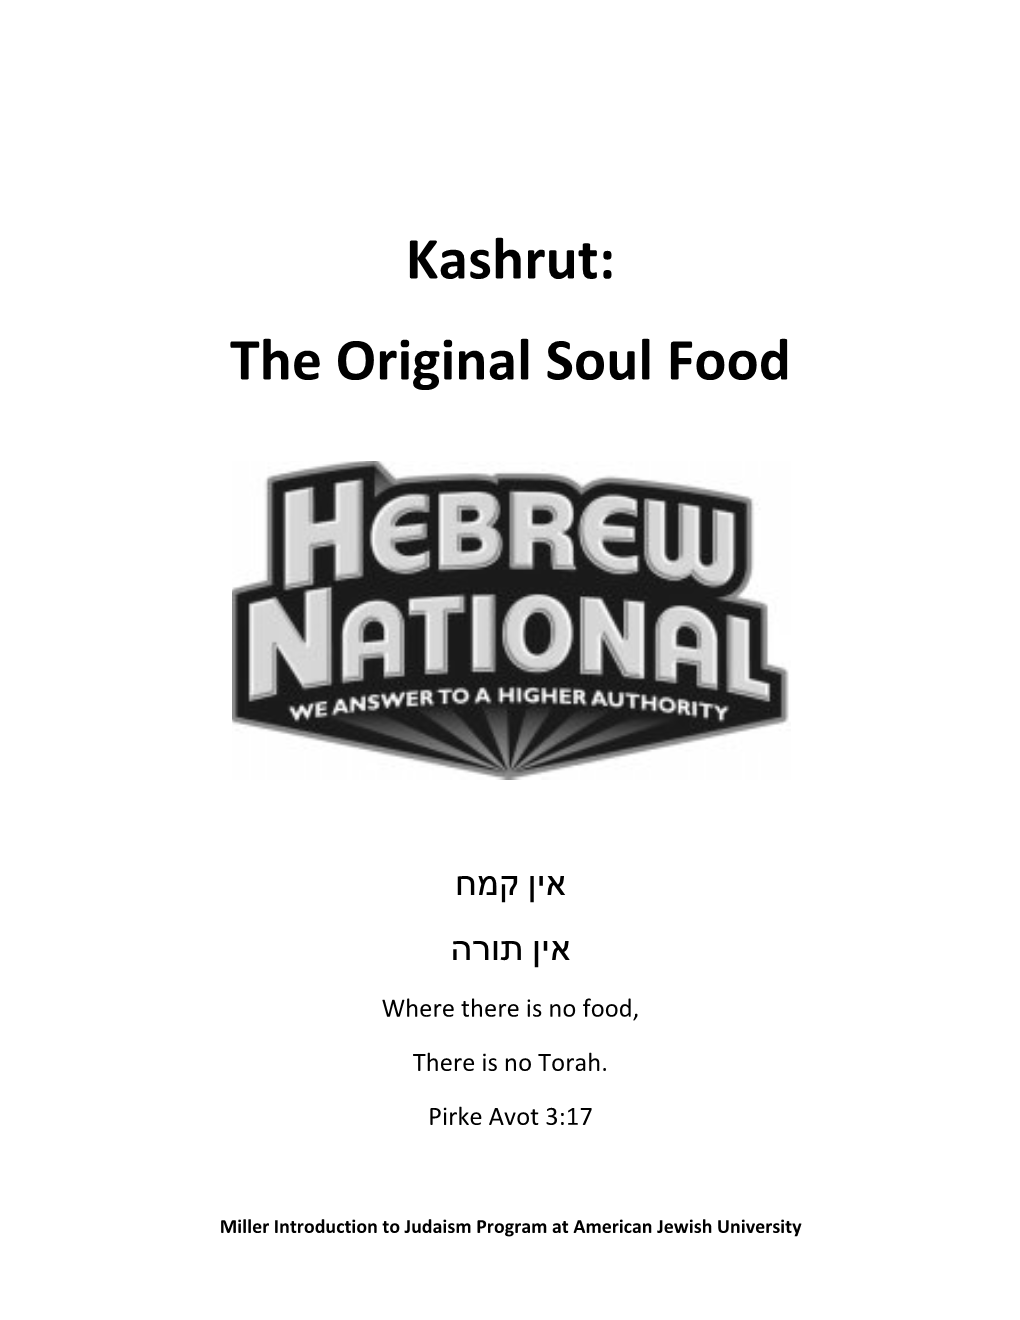 Kashrut: the Original Soul Food